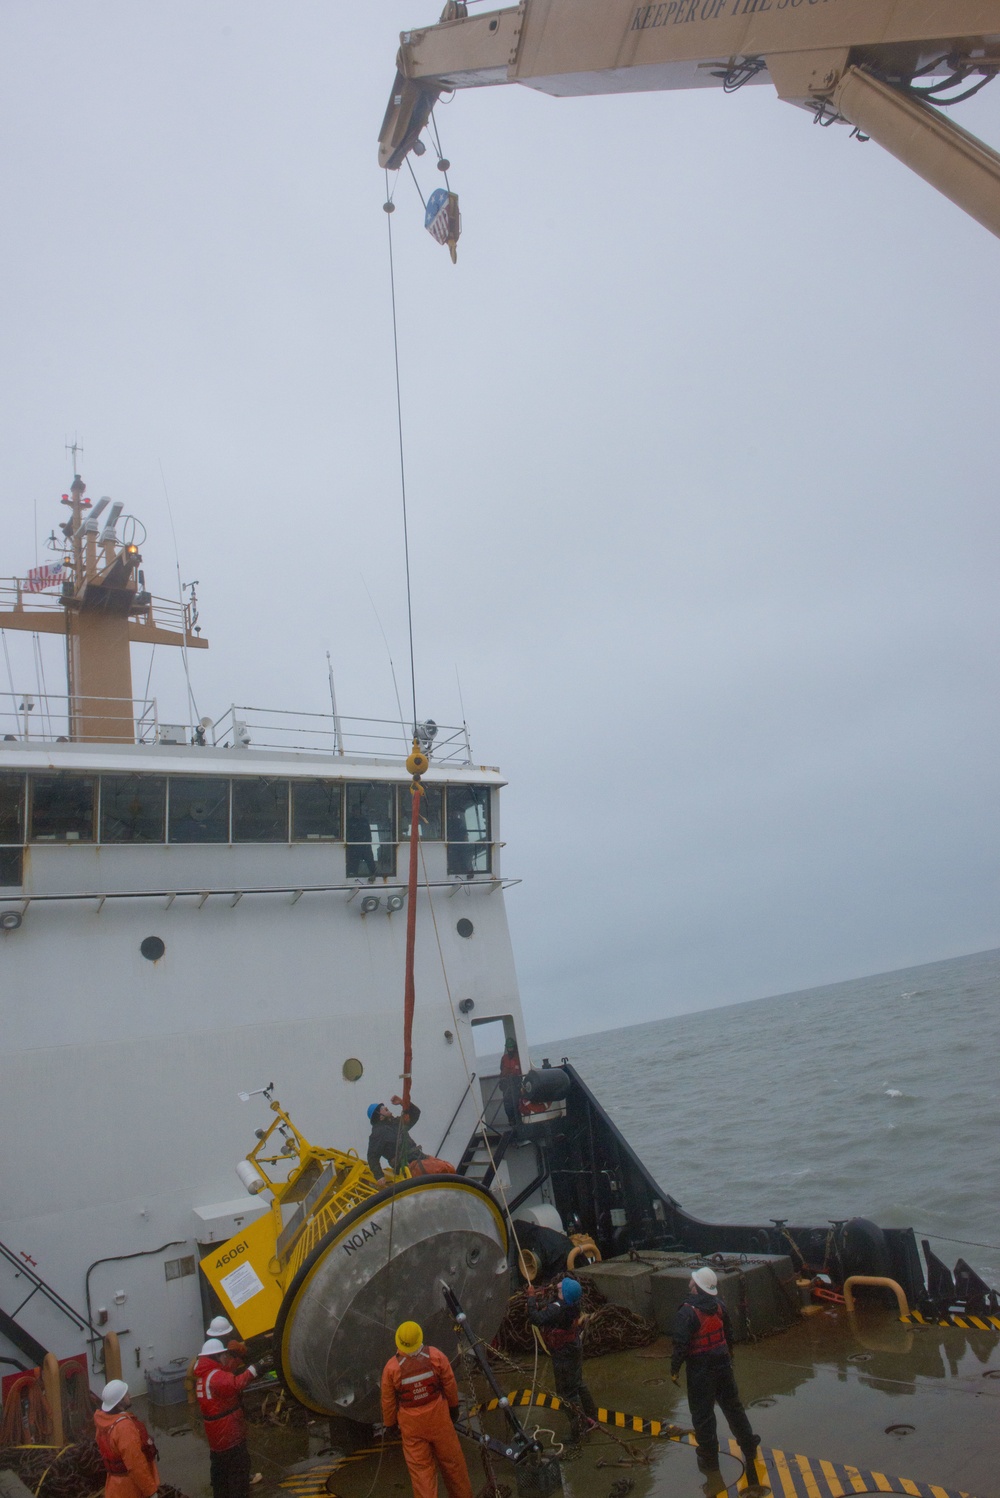 Coast Guard launches NOAA weather buoy at Hinchinbrook Entrance to Prince William Sound, Alaska